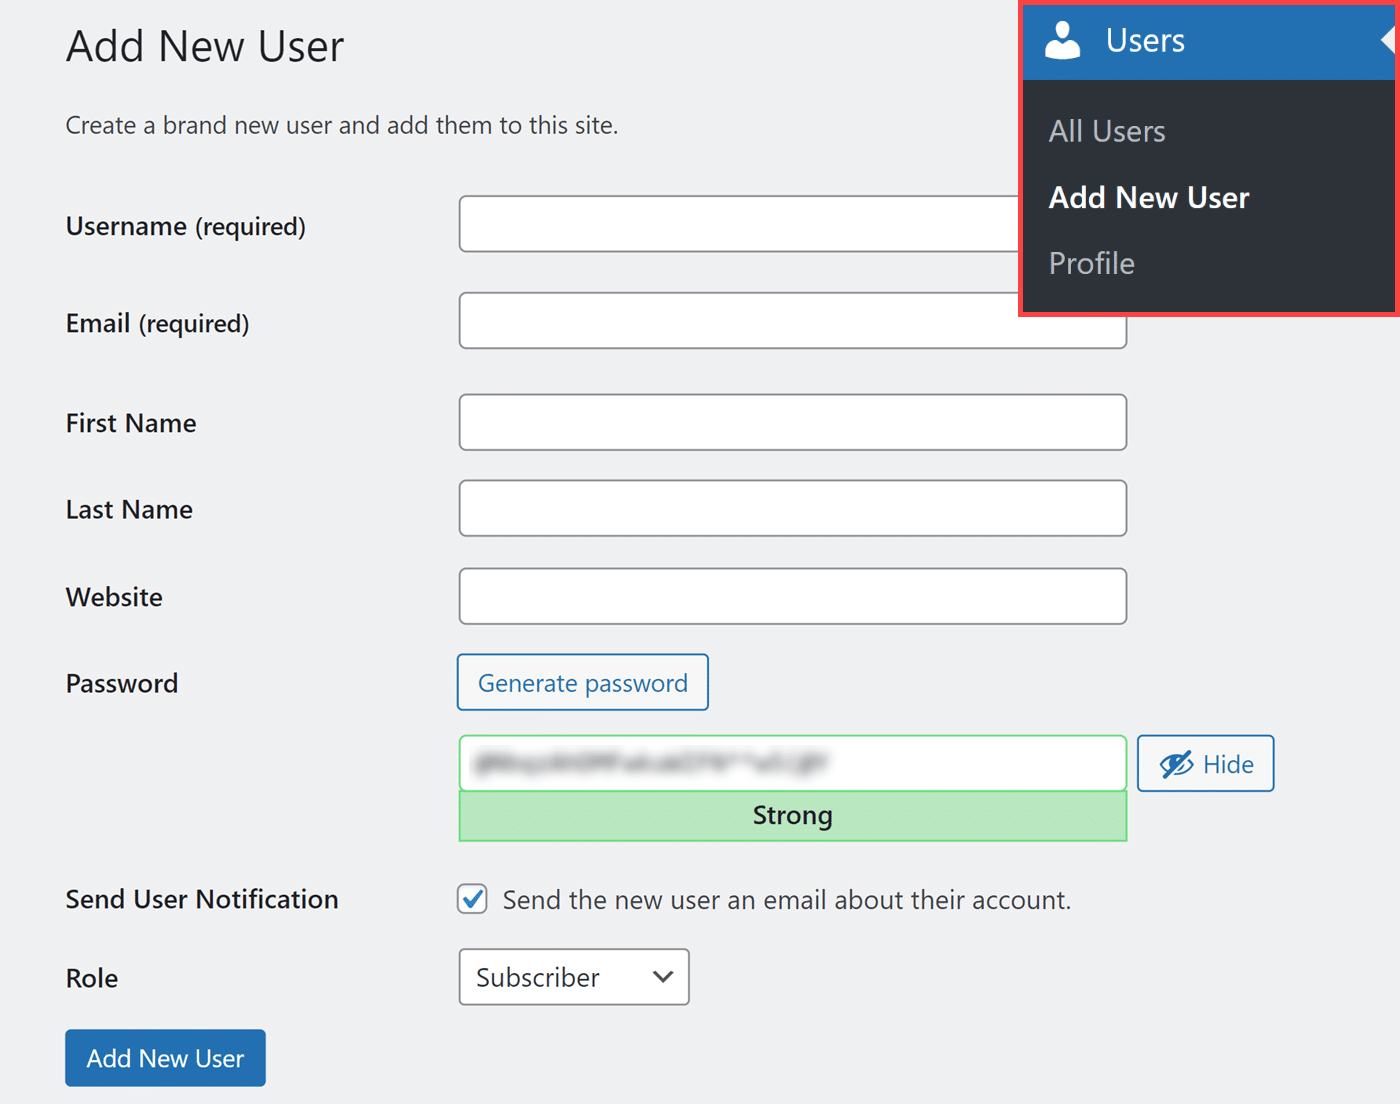 Add new user form